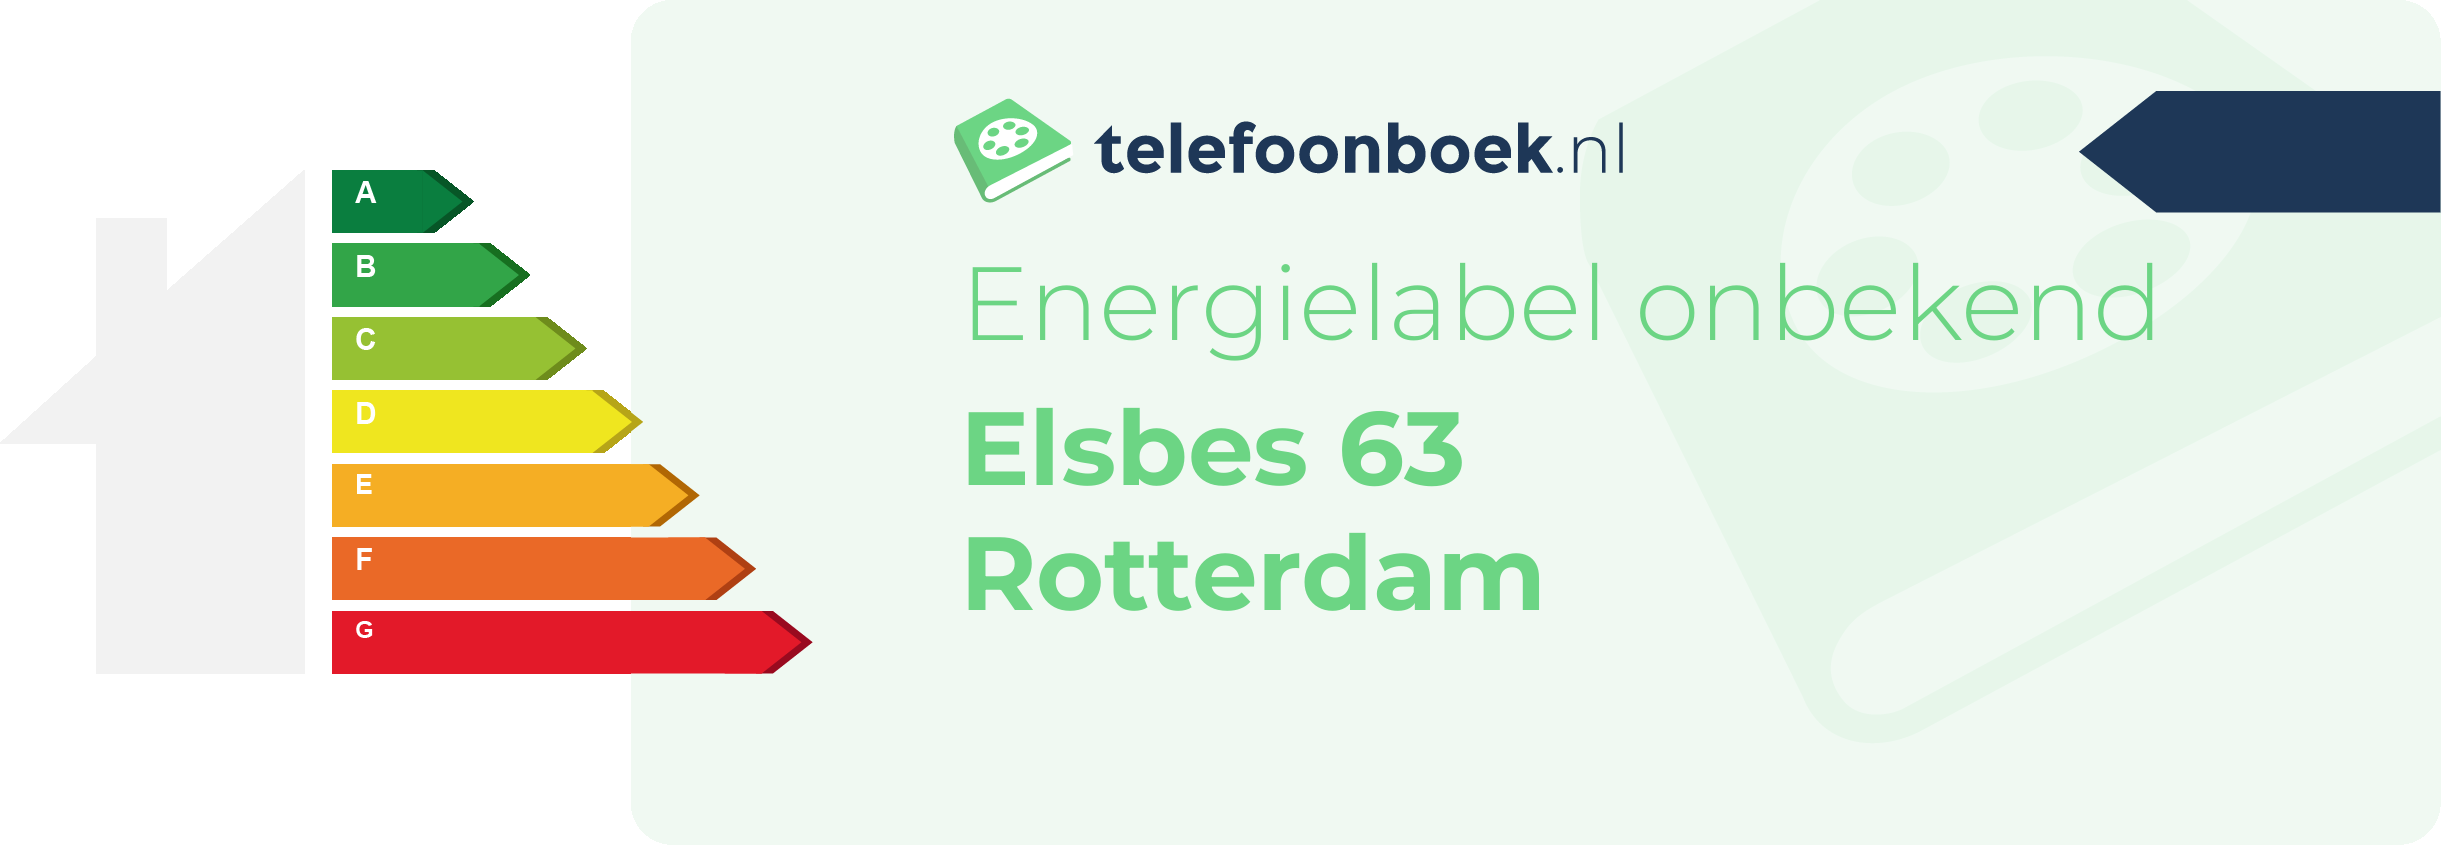 Energielabel Elsbes 63 Rotterdam